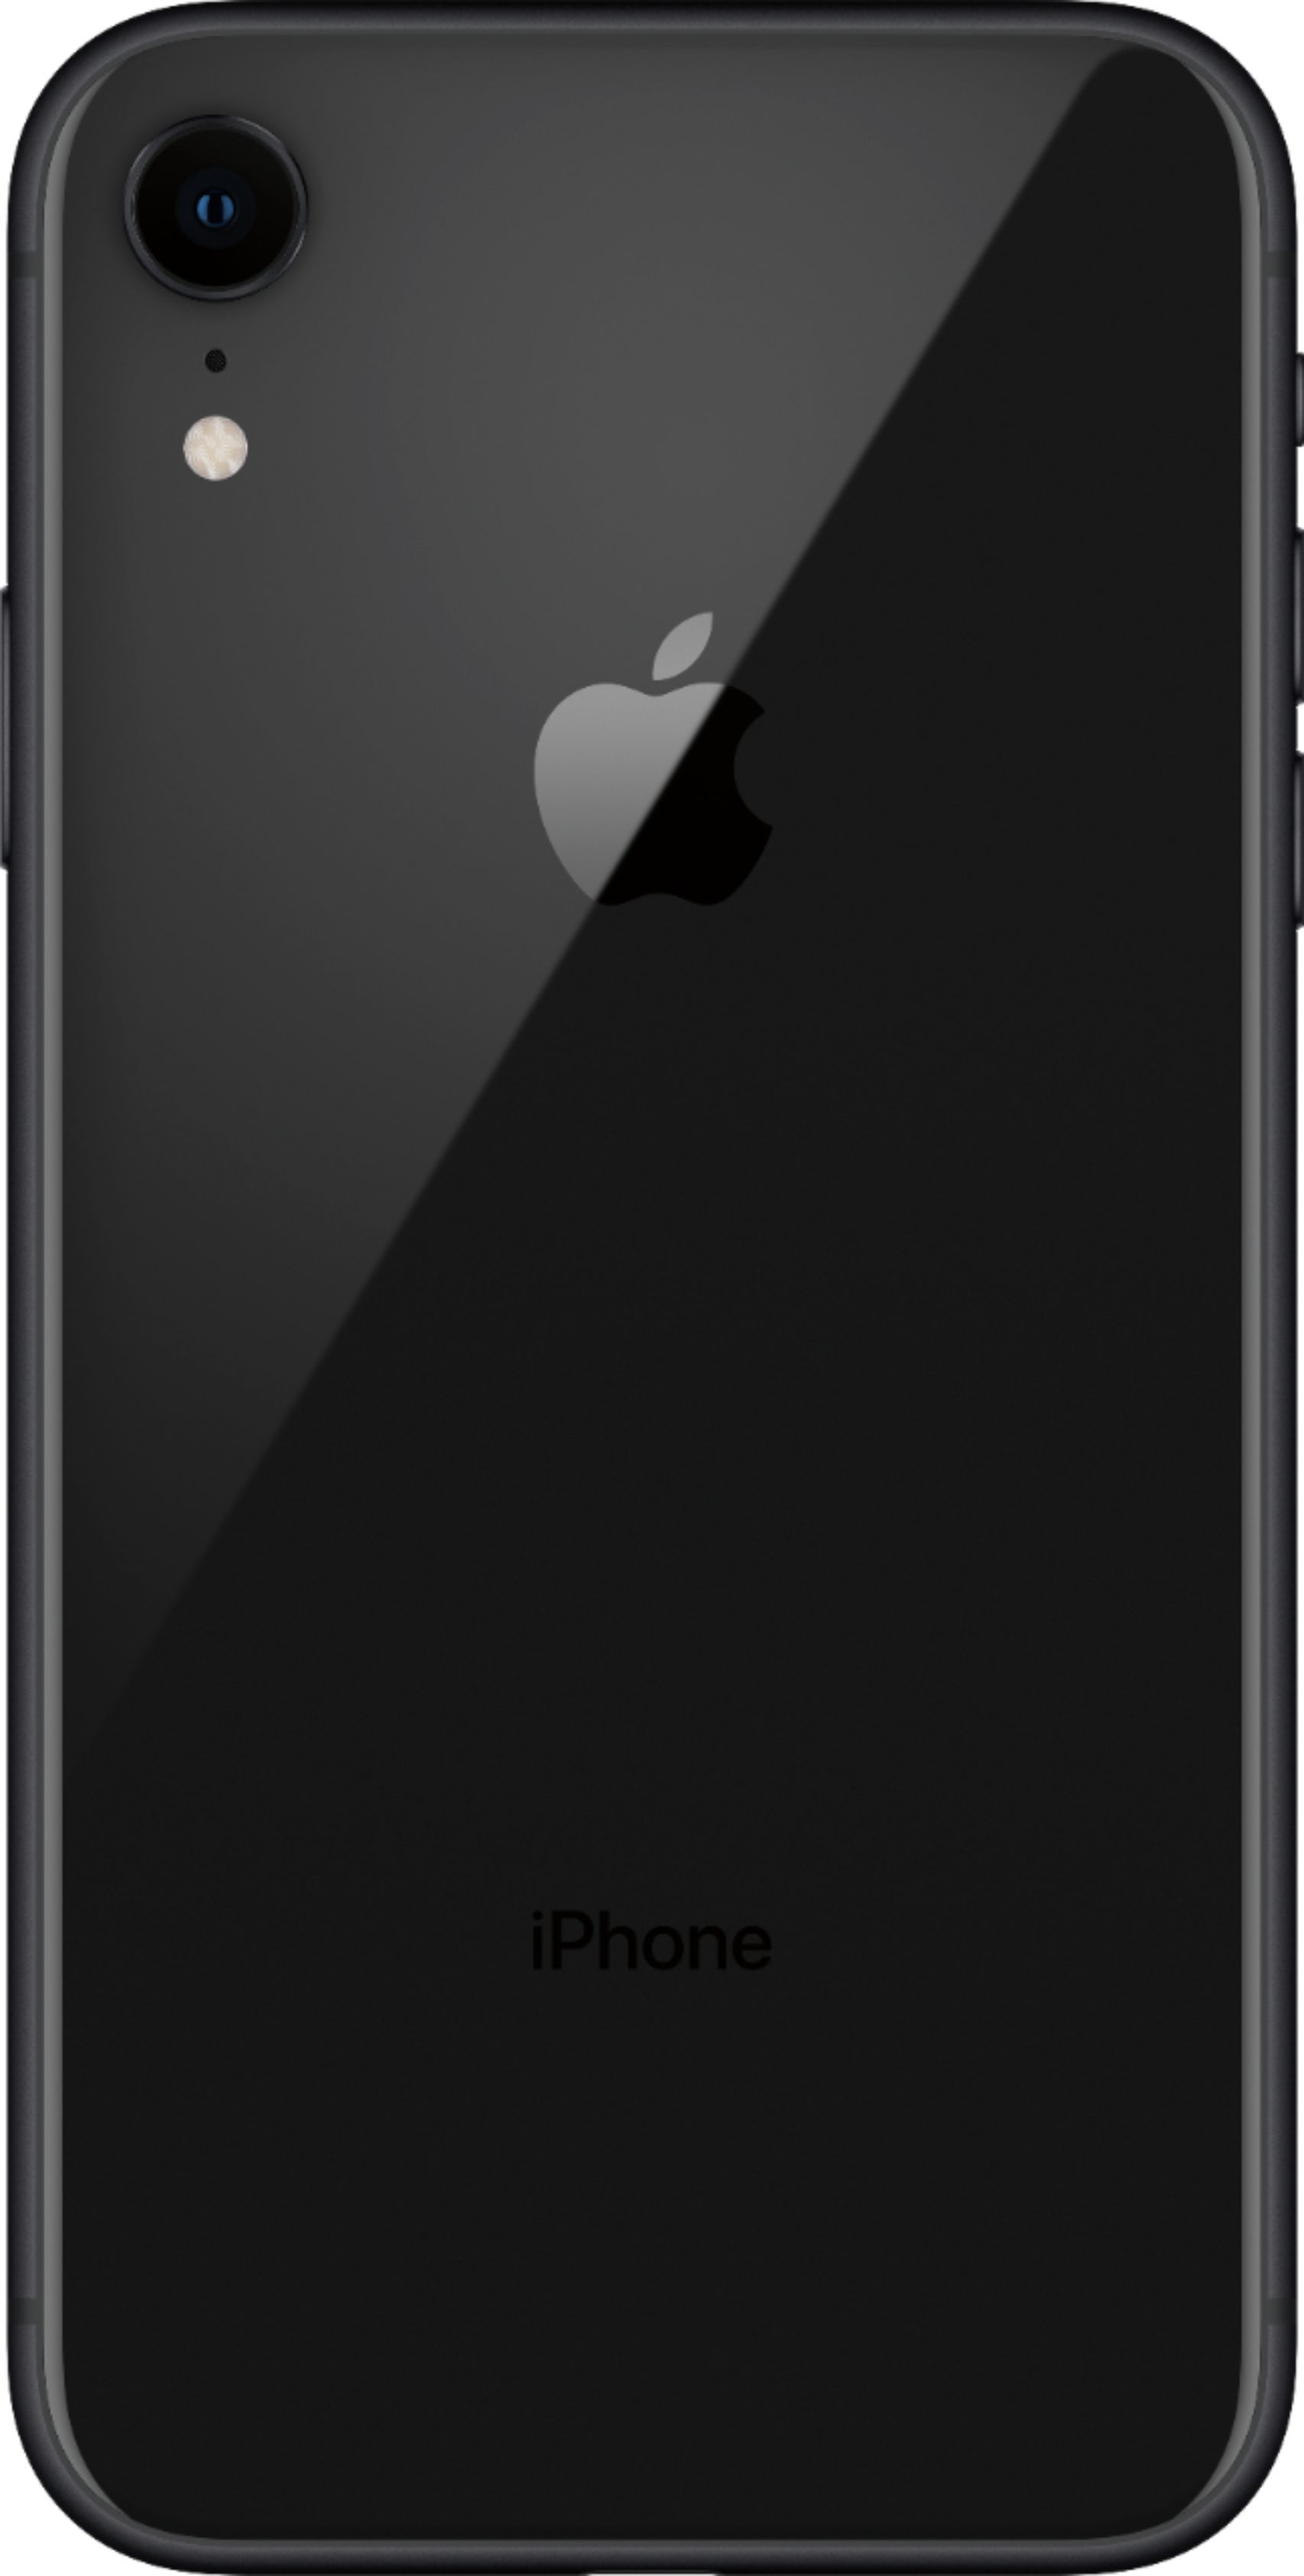 iPhone XR 256 BLACK SIMフリー スマートフォン本体 スマートフォン/携帯電話 家電・スマホ・カメラ オンラインストア公式店